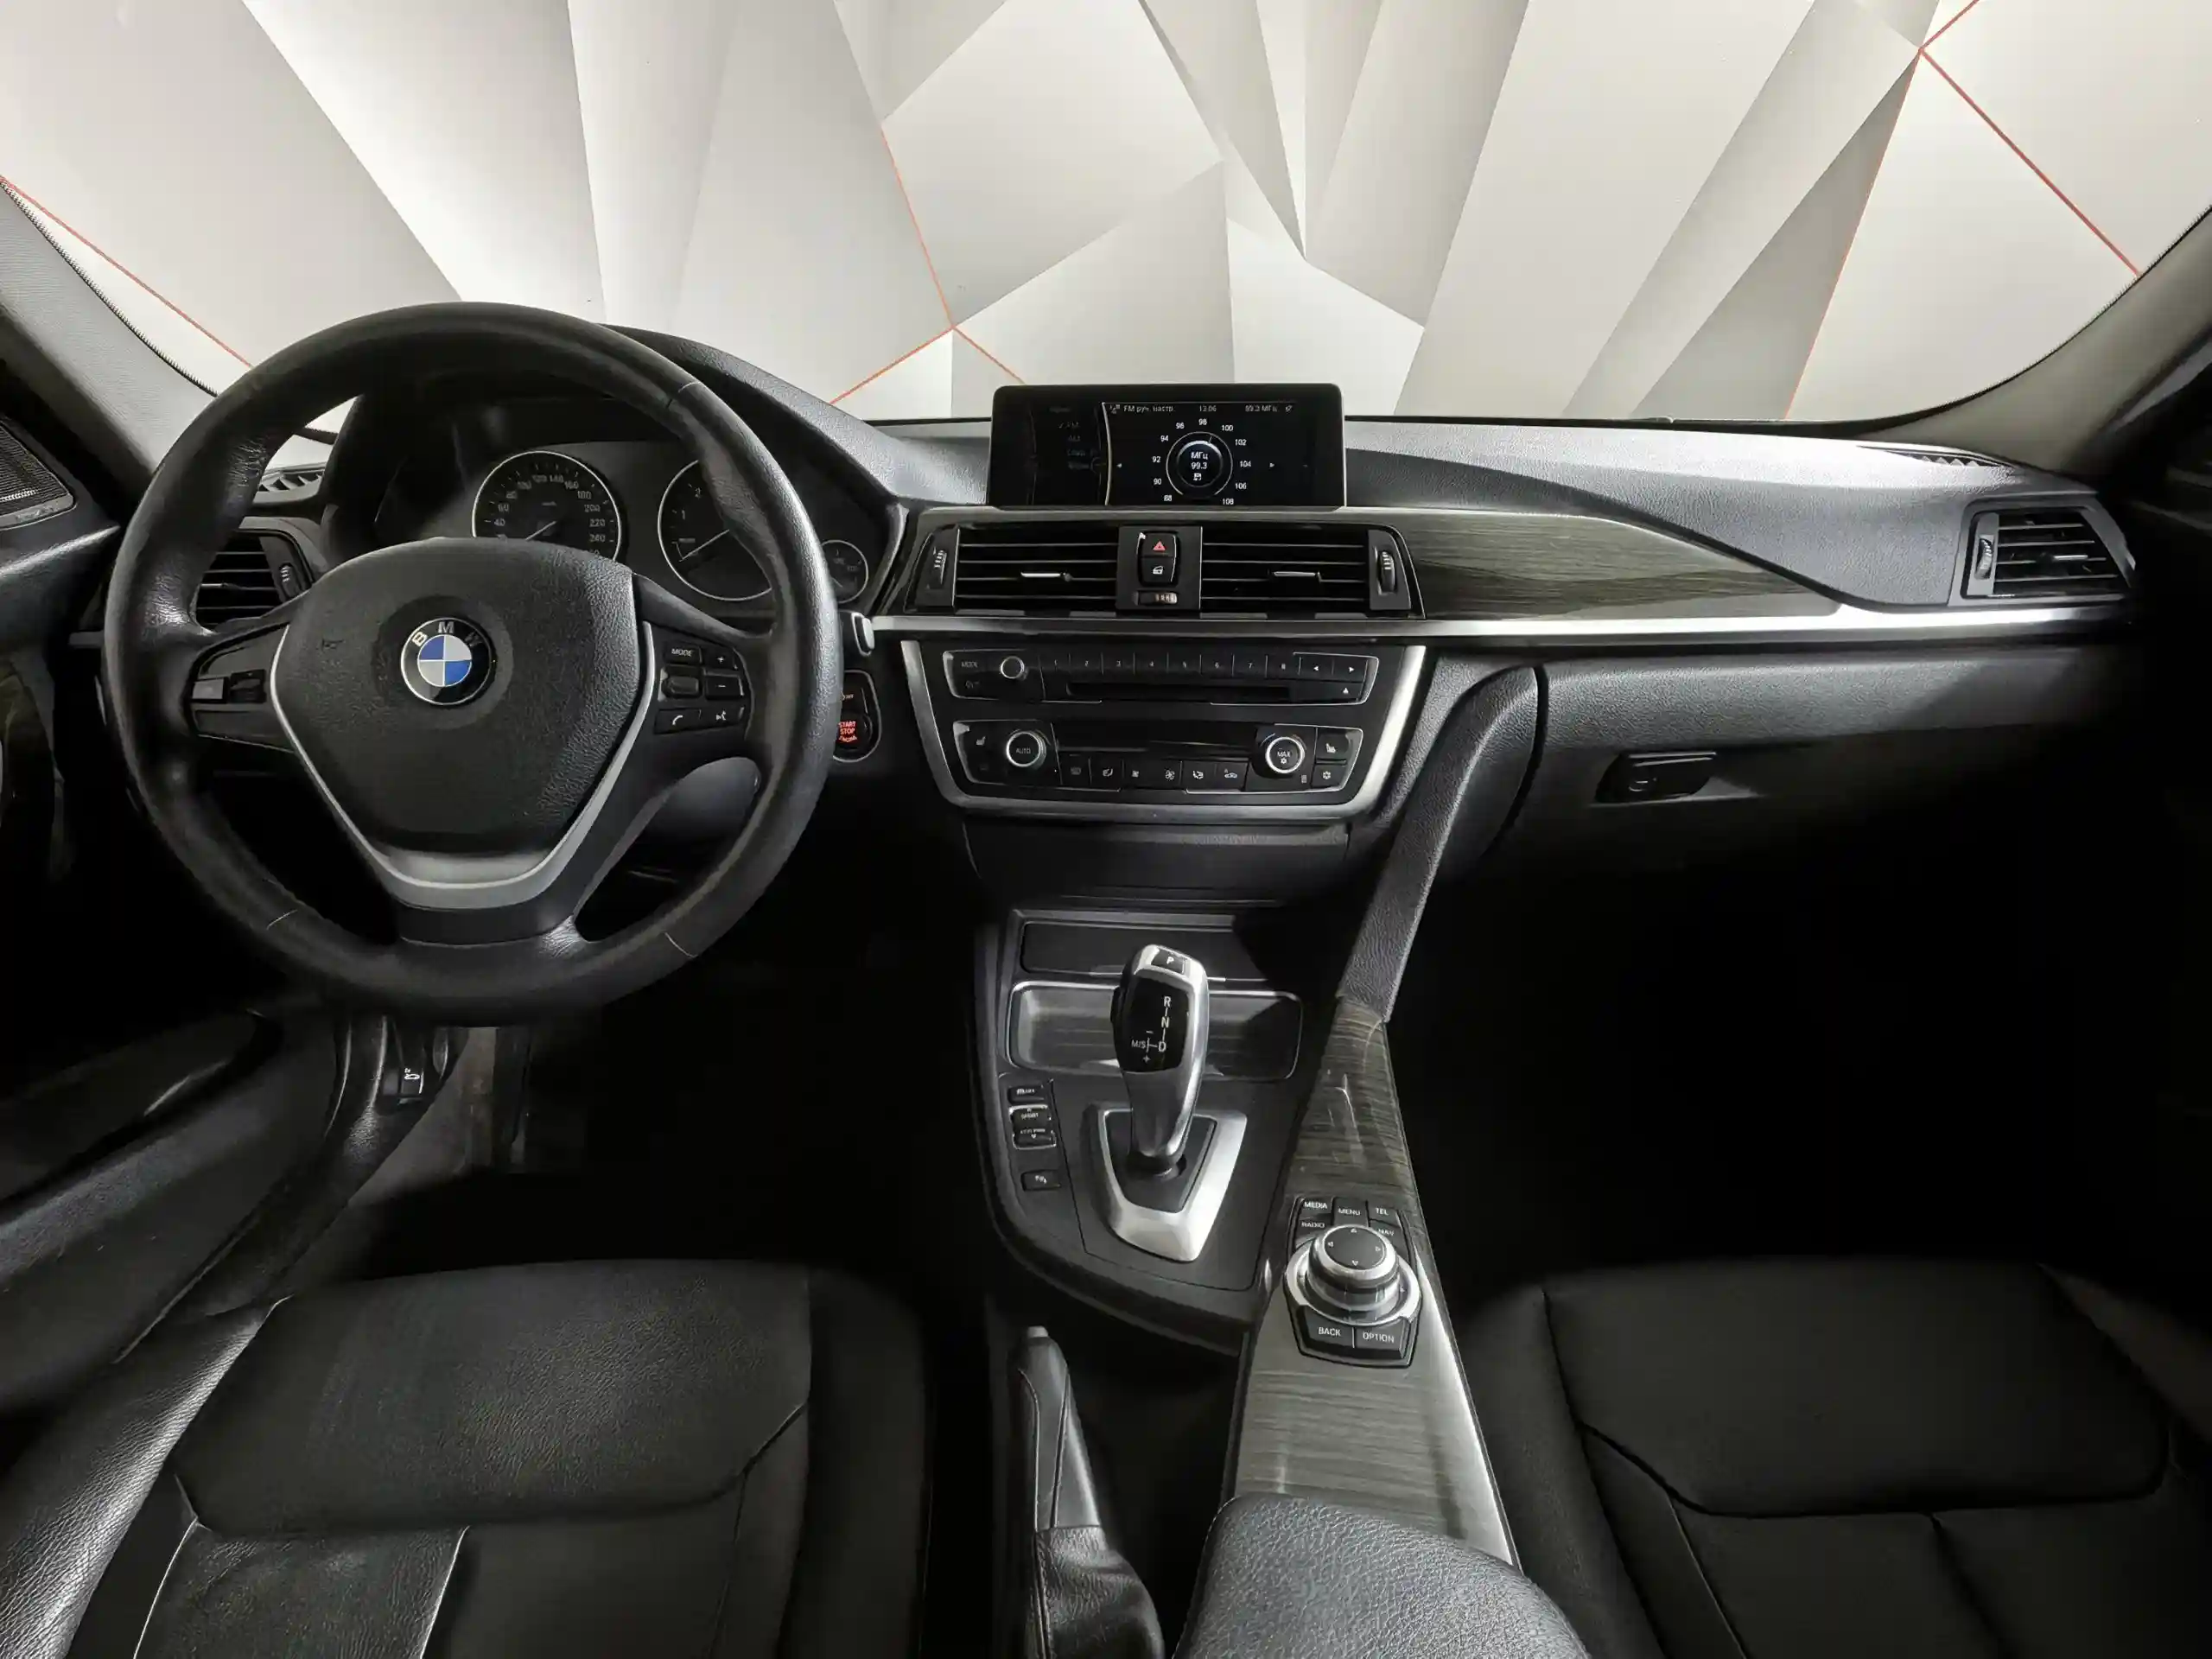 BMW 3 серия 2012